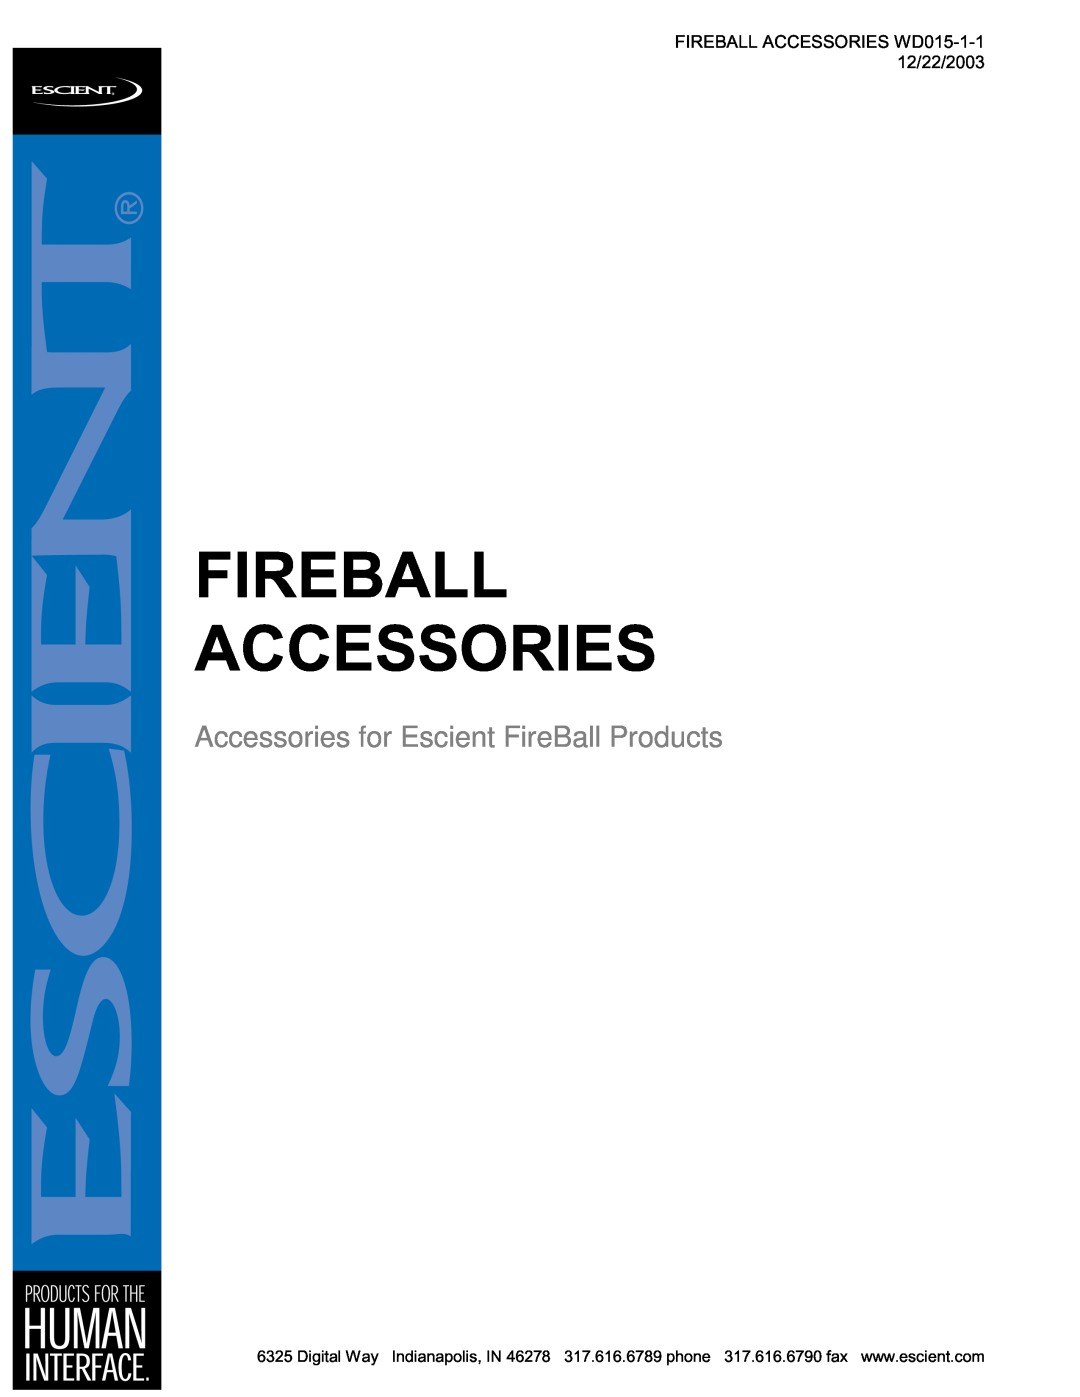 Escient MP-150 manual Fireball Accessories, Accessories for Escient FireBall Products 